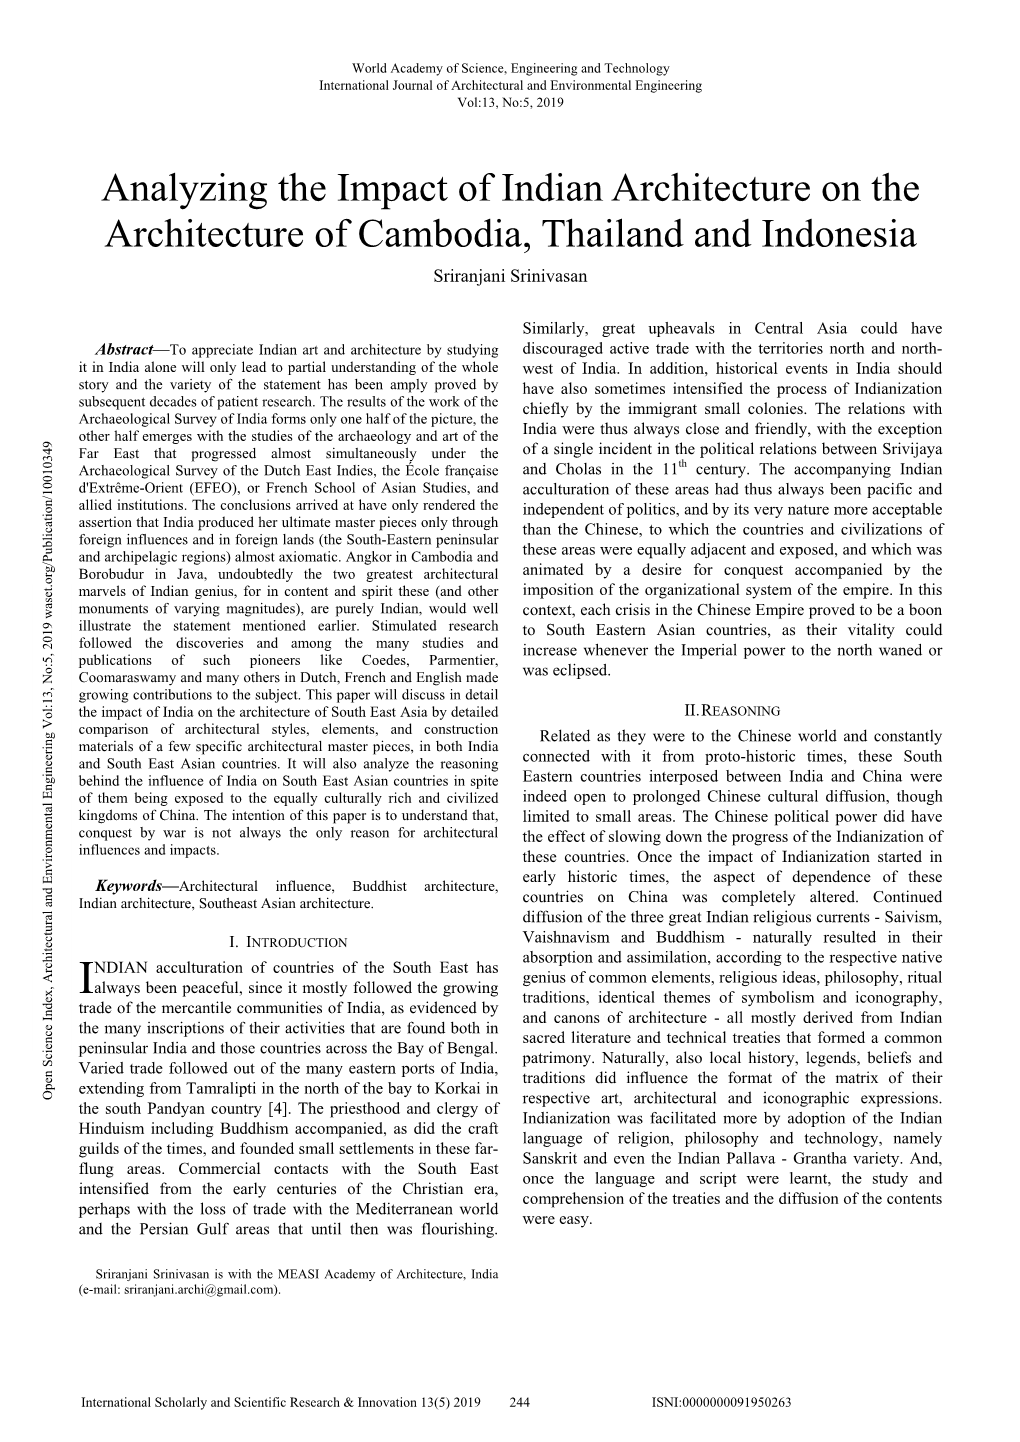 Analyzing the Impact of Indian Architecture on the Architecture of Cambodia, Thailand and Indonesia Sriranjani Srinivasan